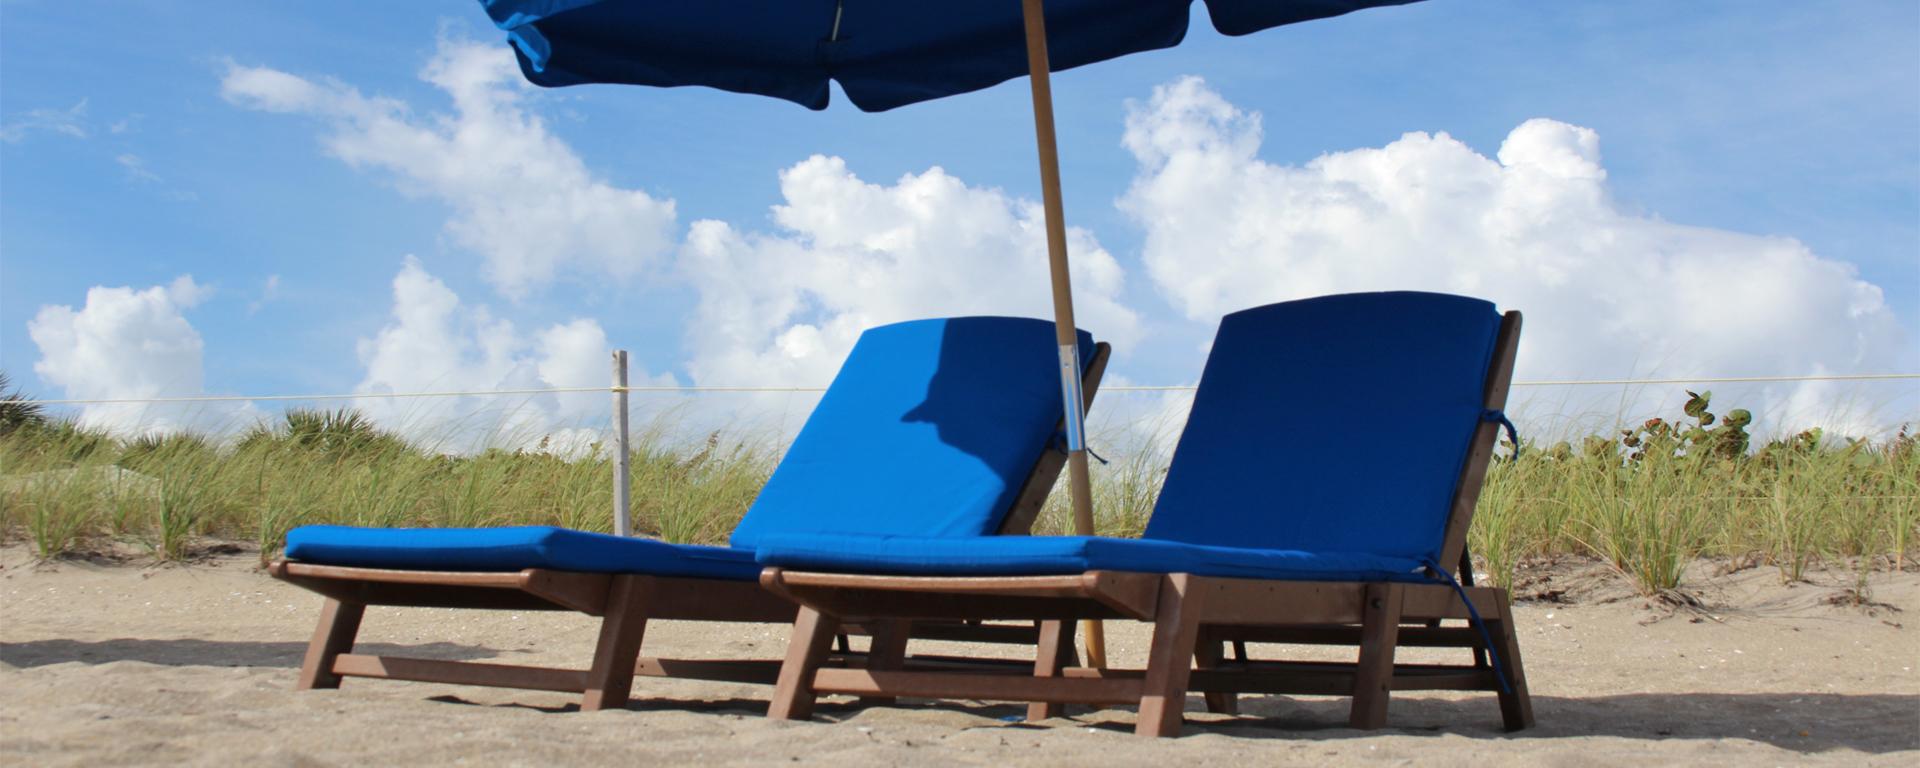 New Barceloneta Beach Chair Rental for Living room